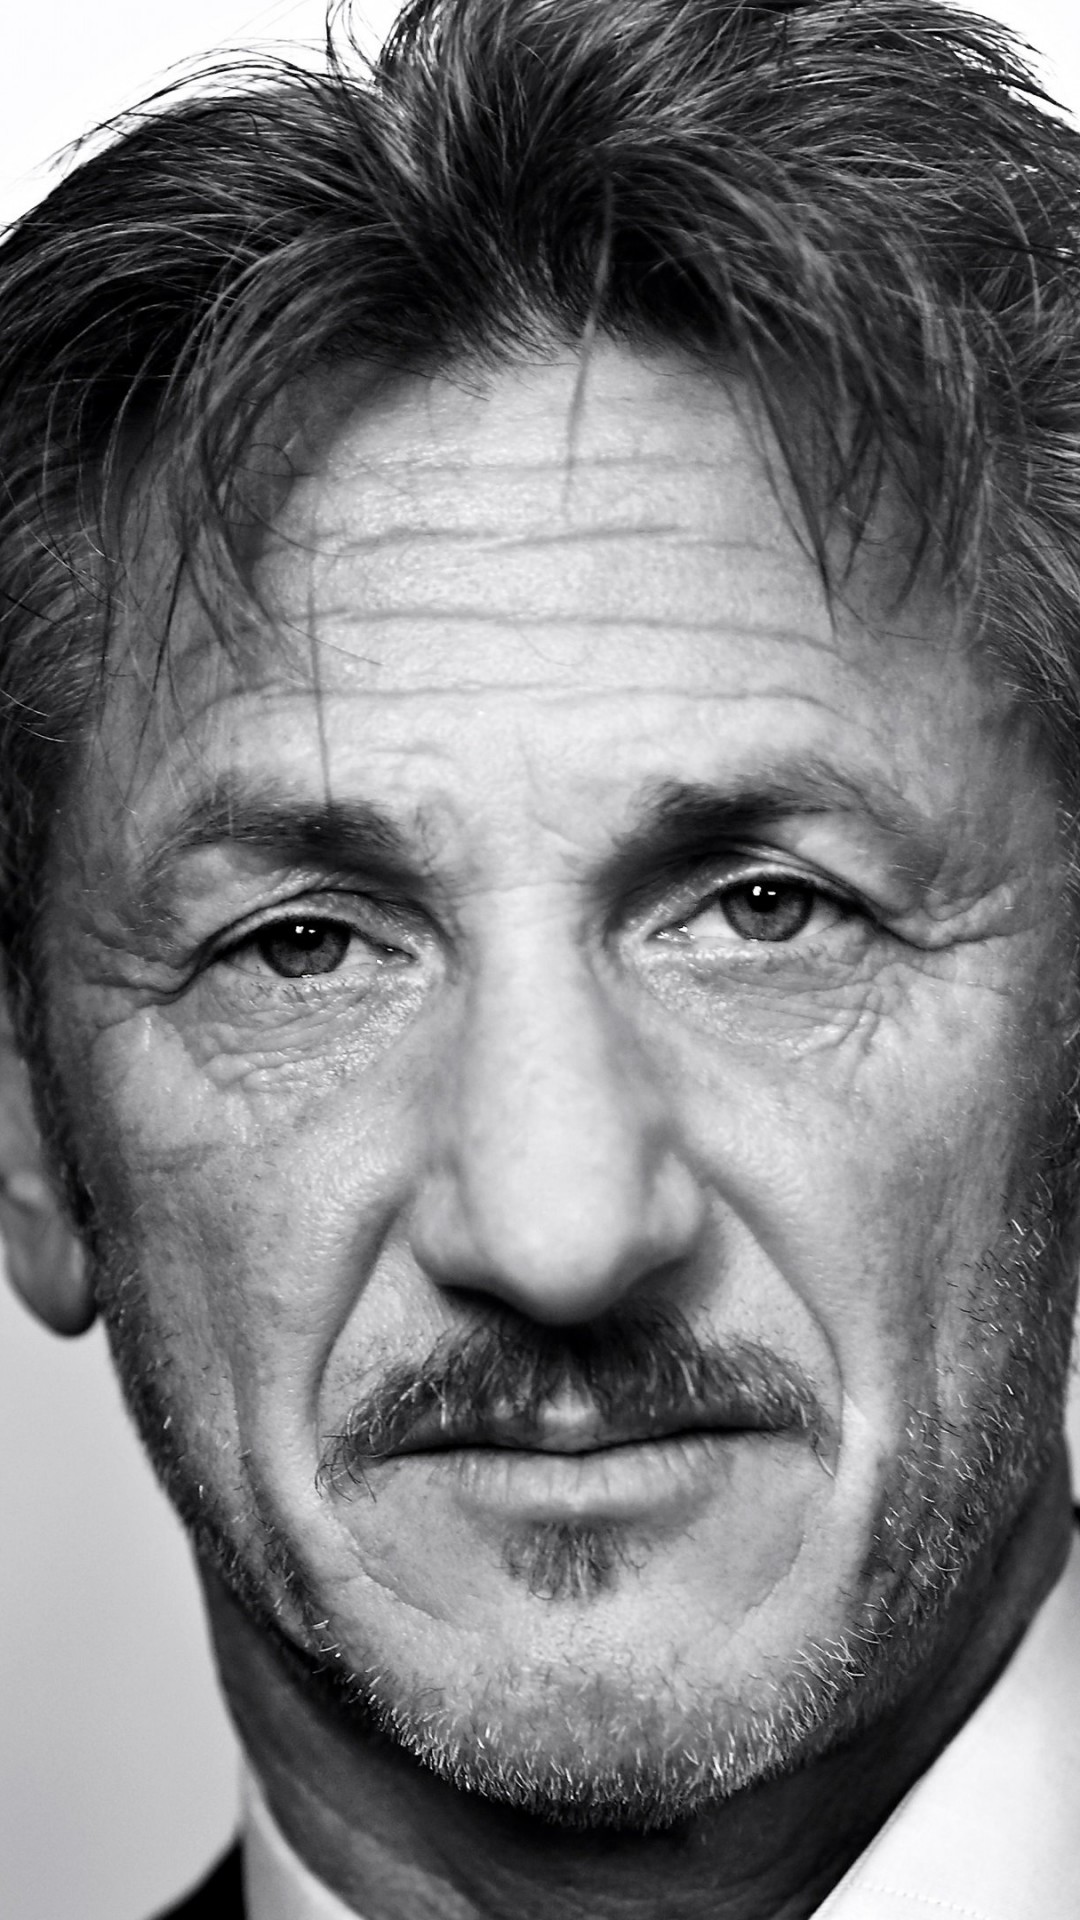 Sean Penn Portrait in Black & White Wallpaper for Google Nexus 5